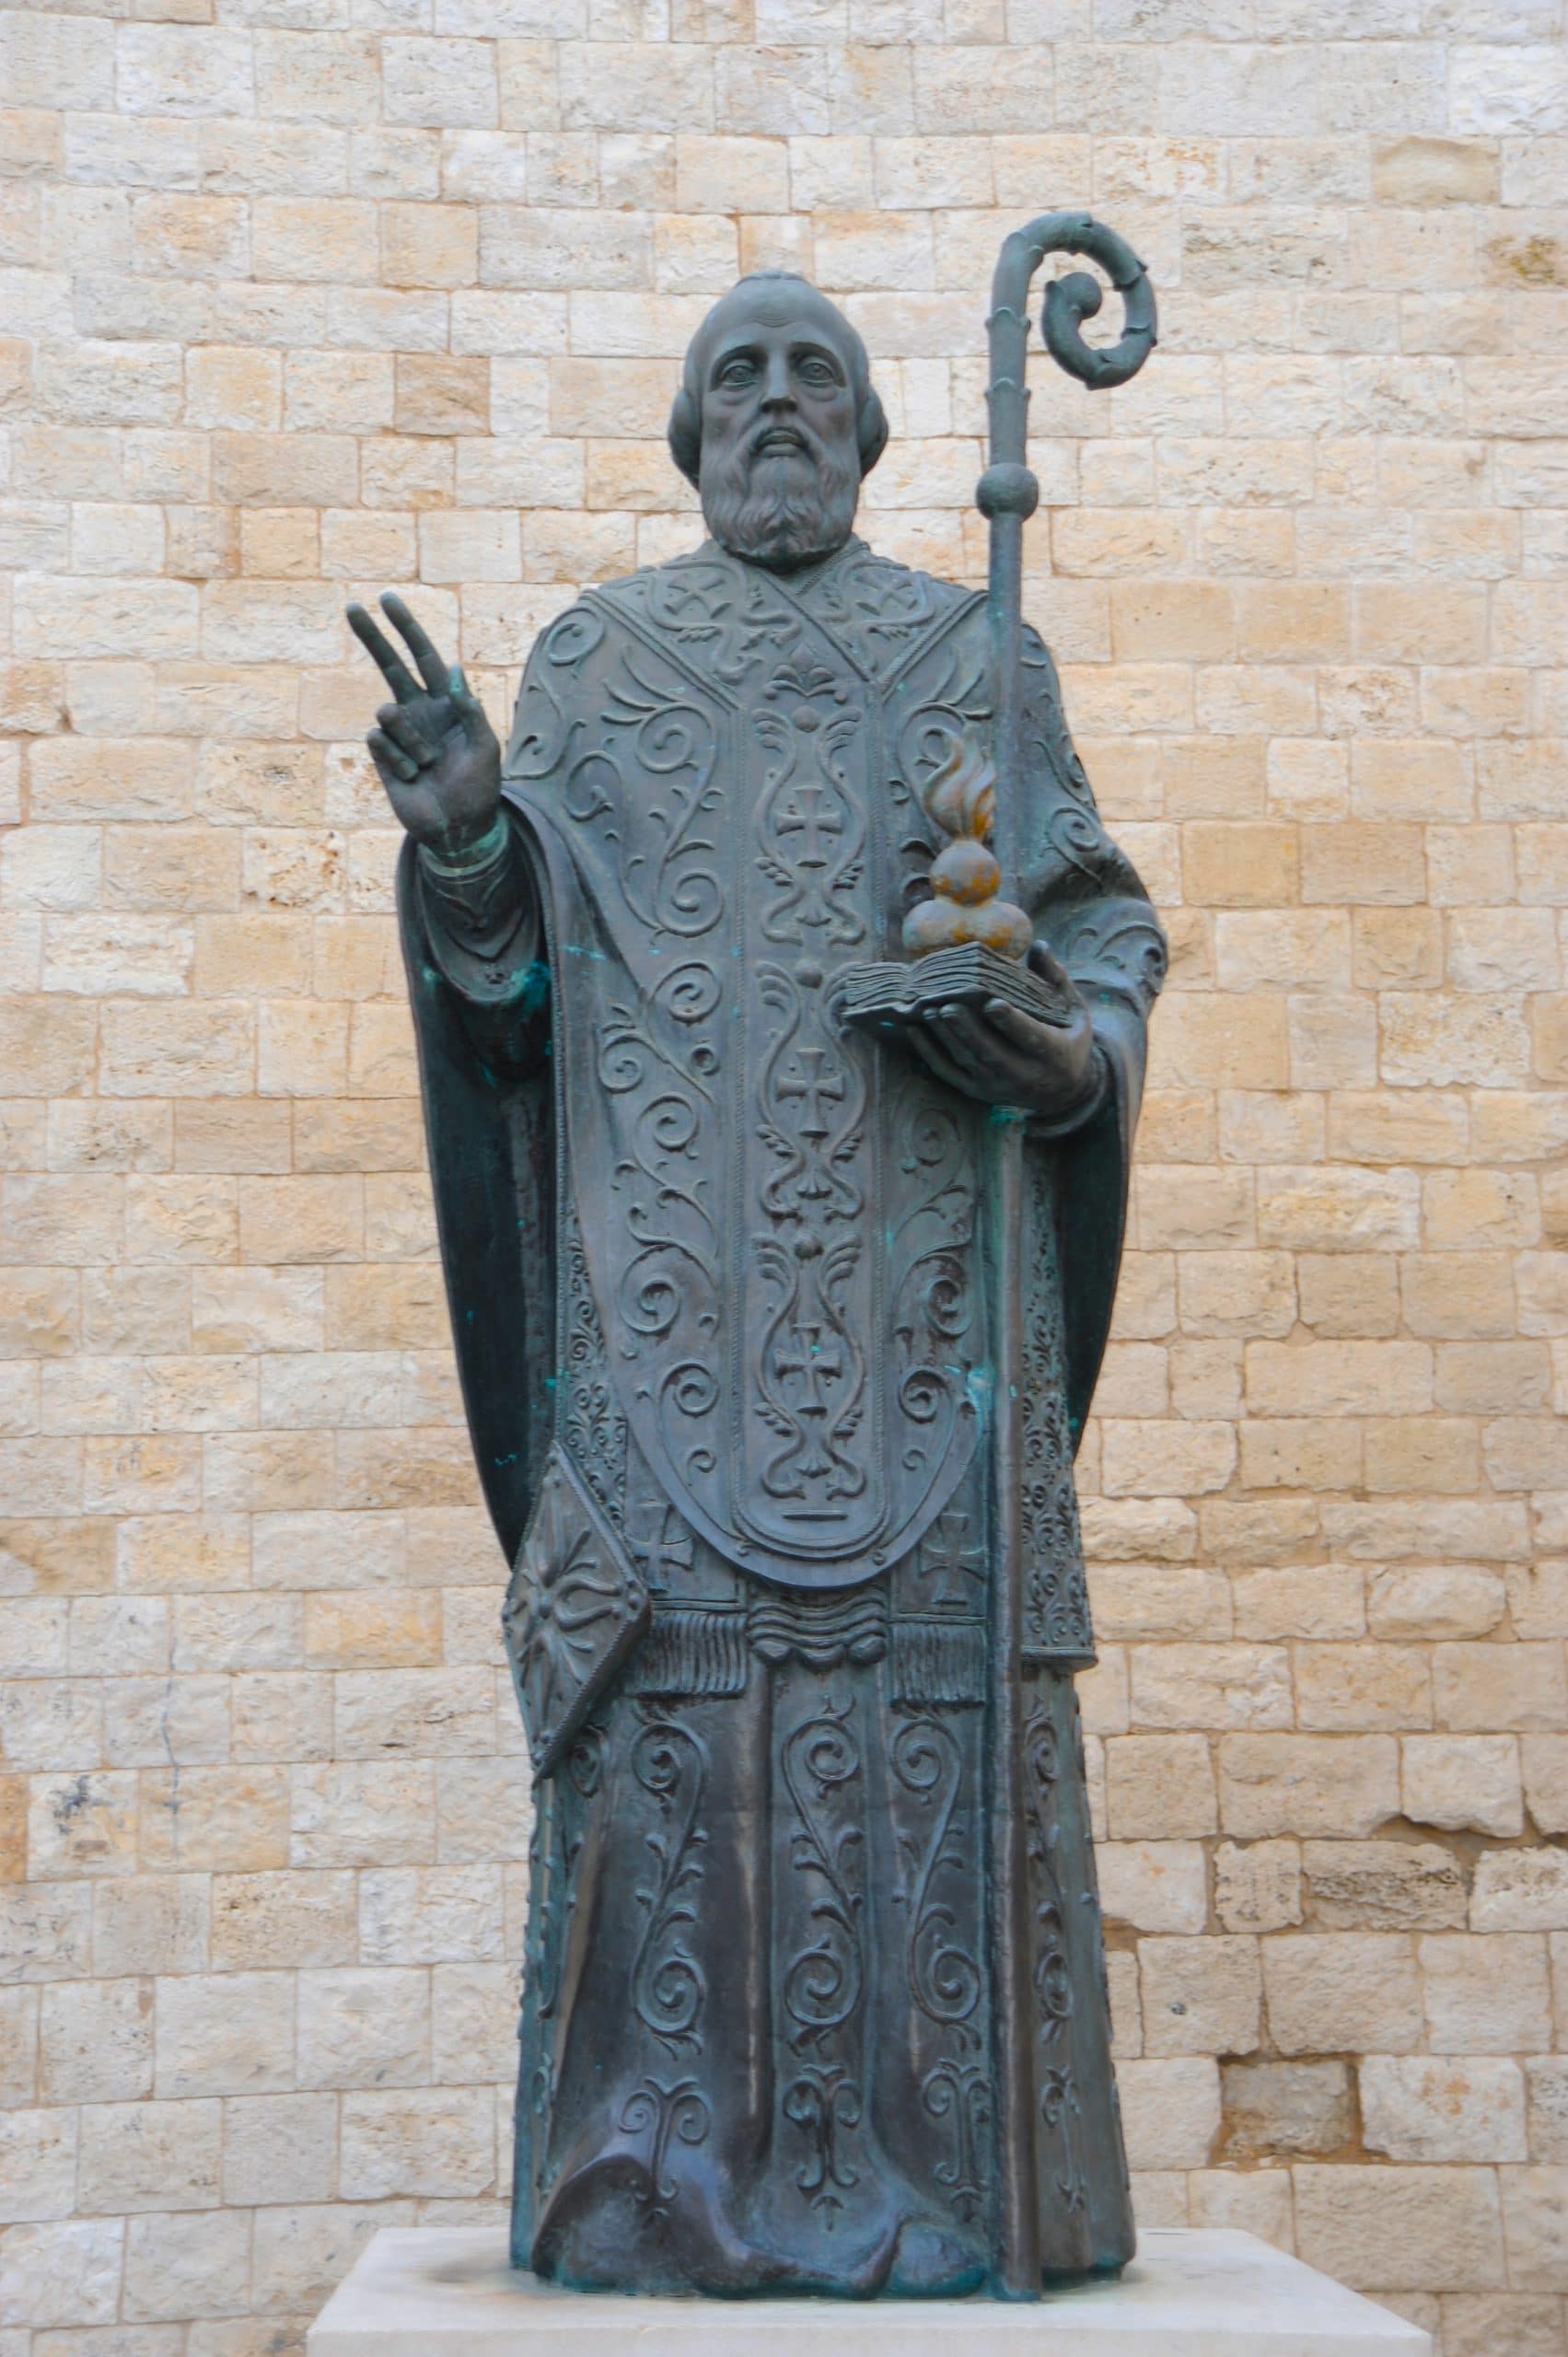 St. Nikolaos in Bari, Italy